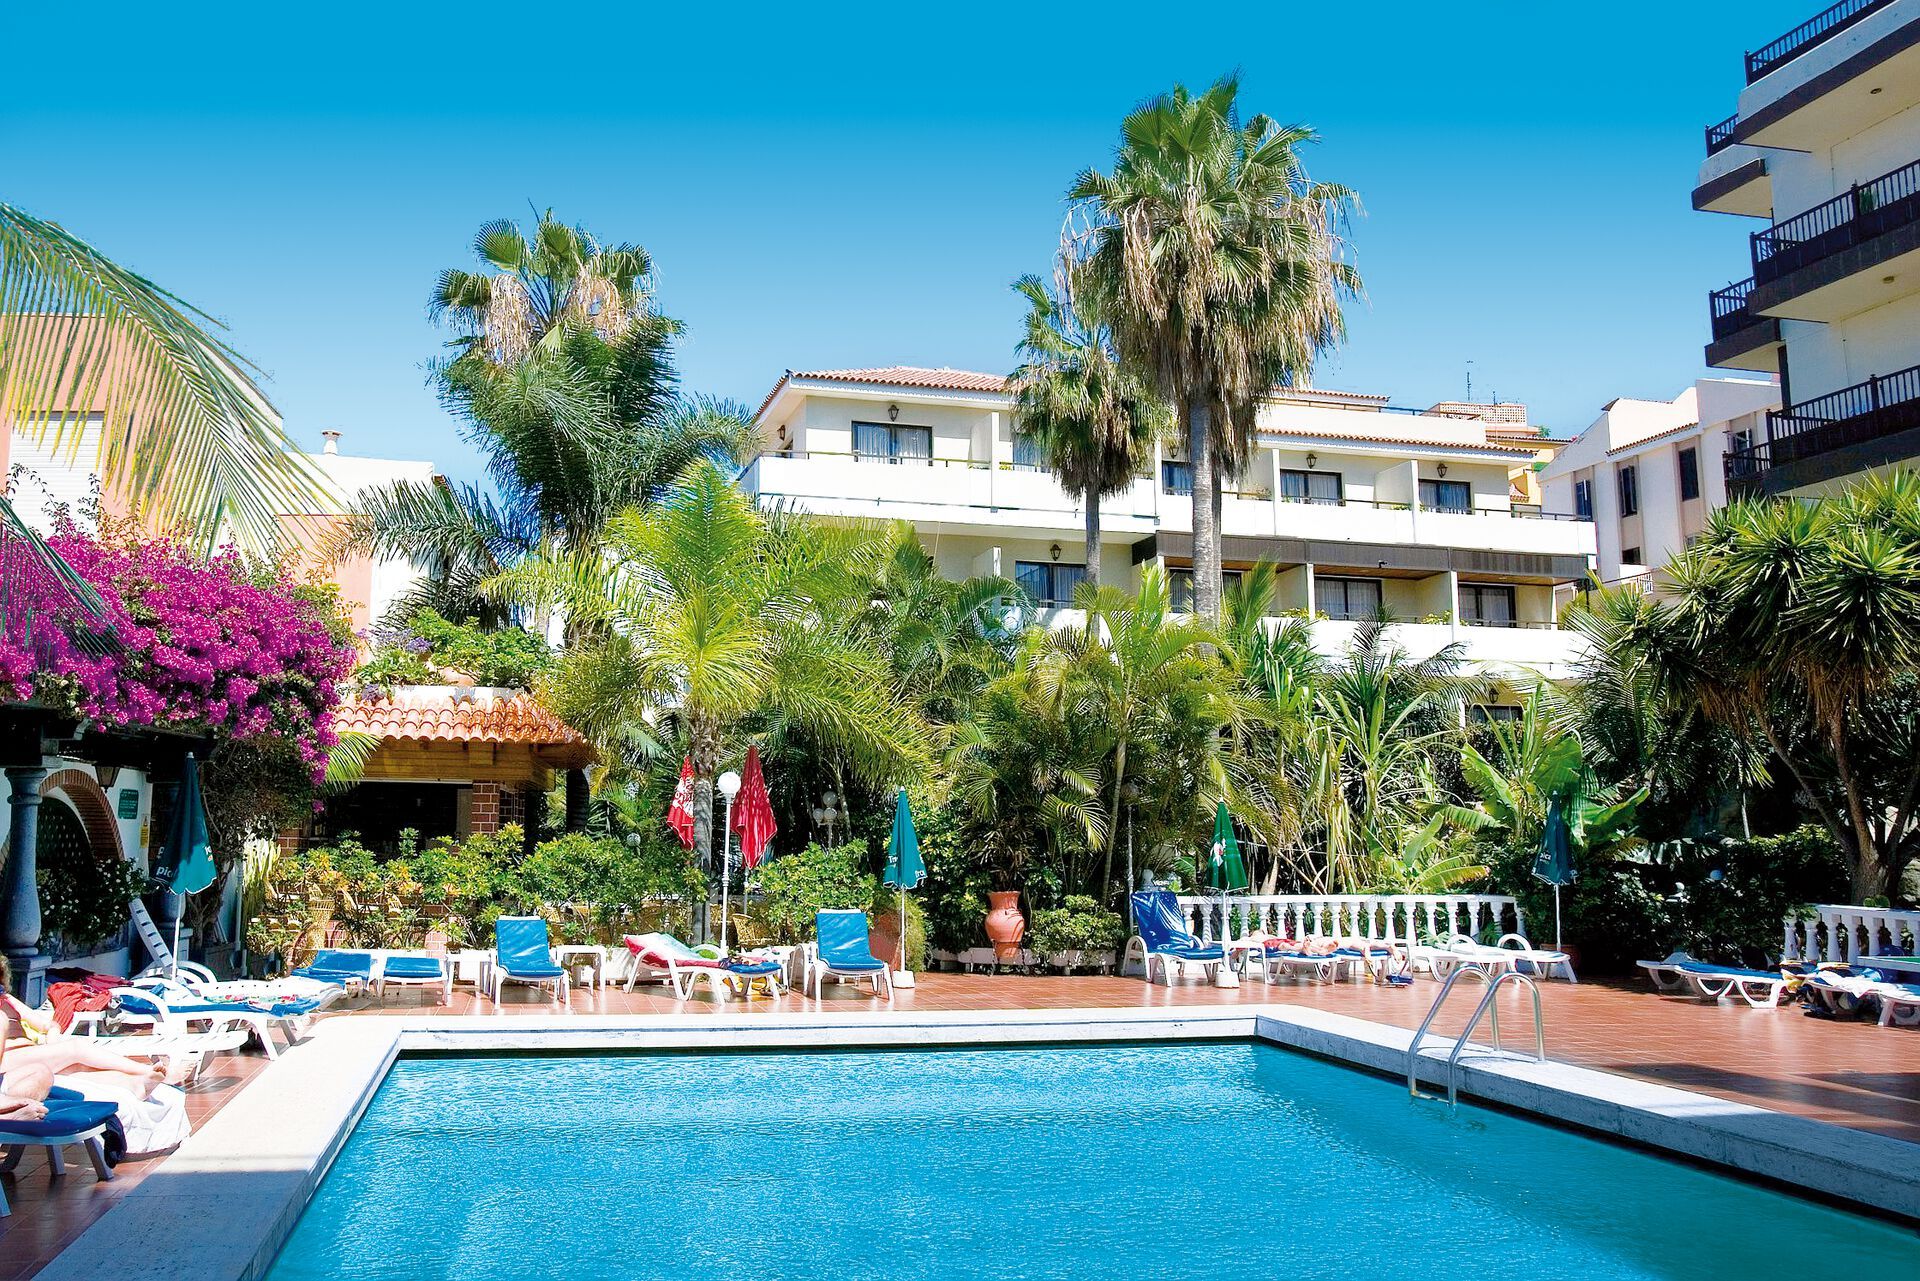 Canaries - Tenerife - Espagne - Hotel Don Manolito 3*